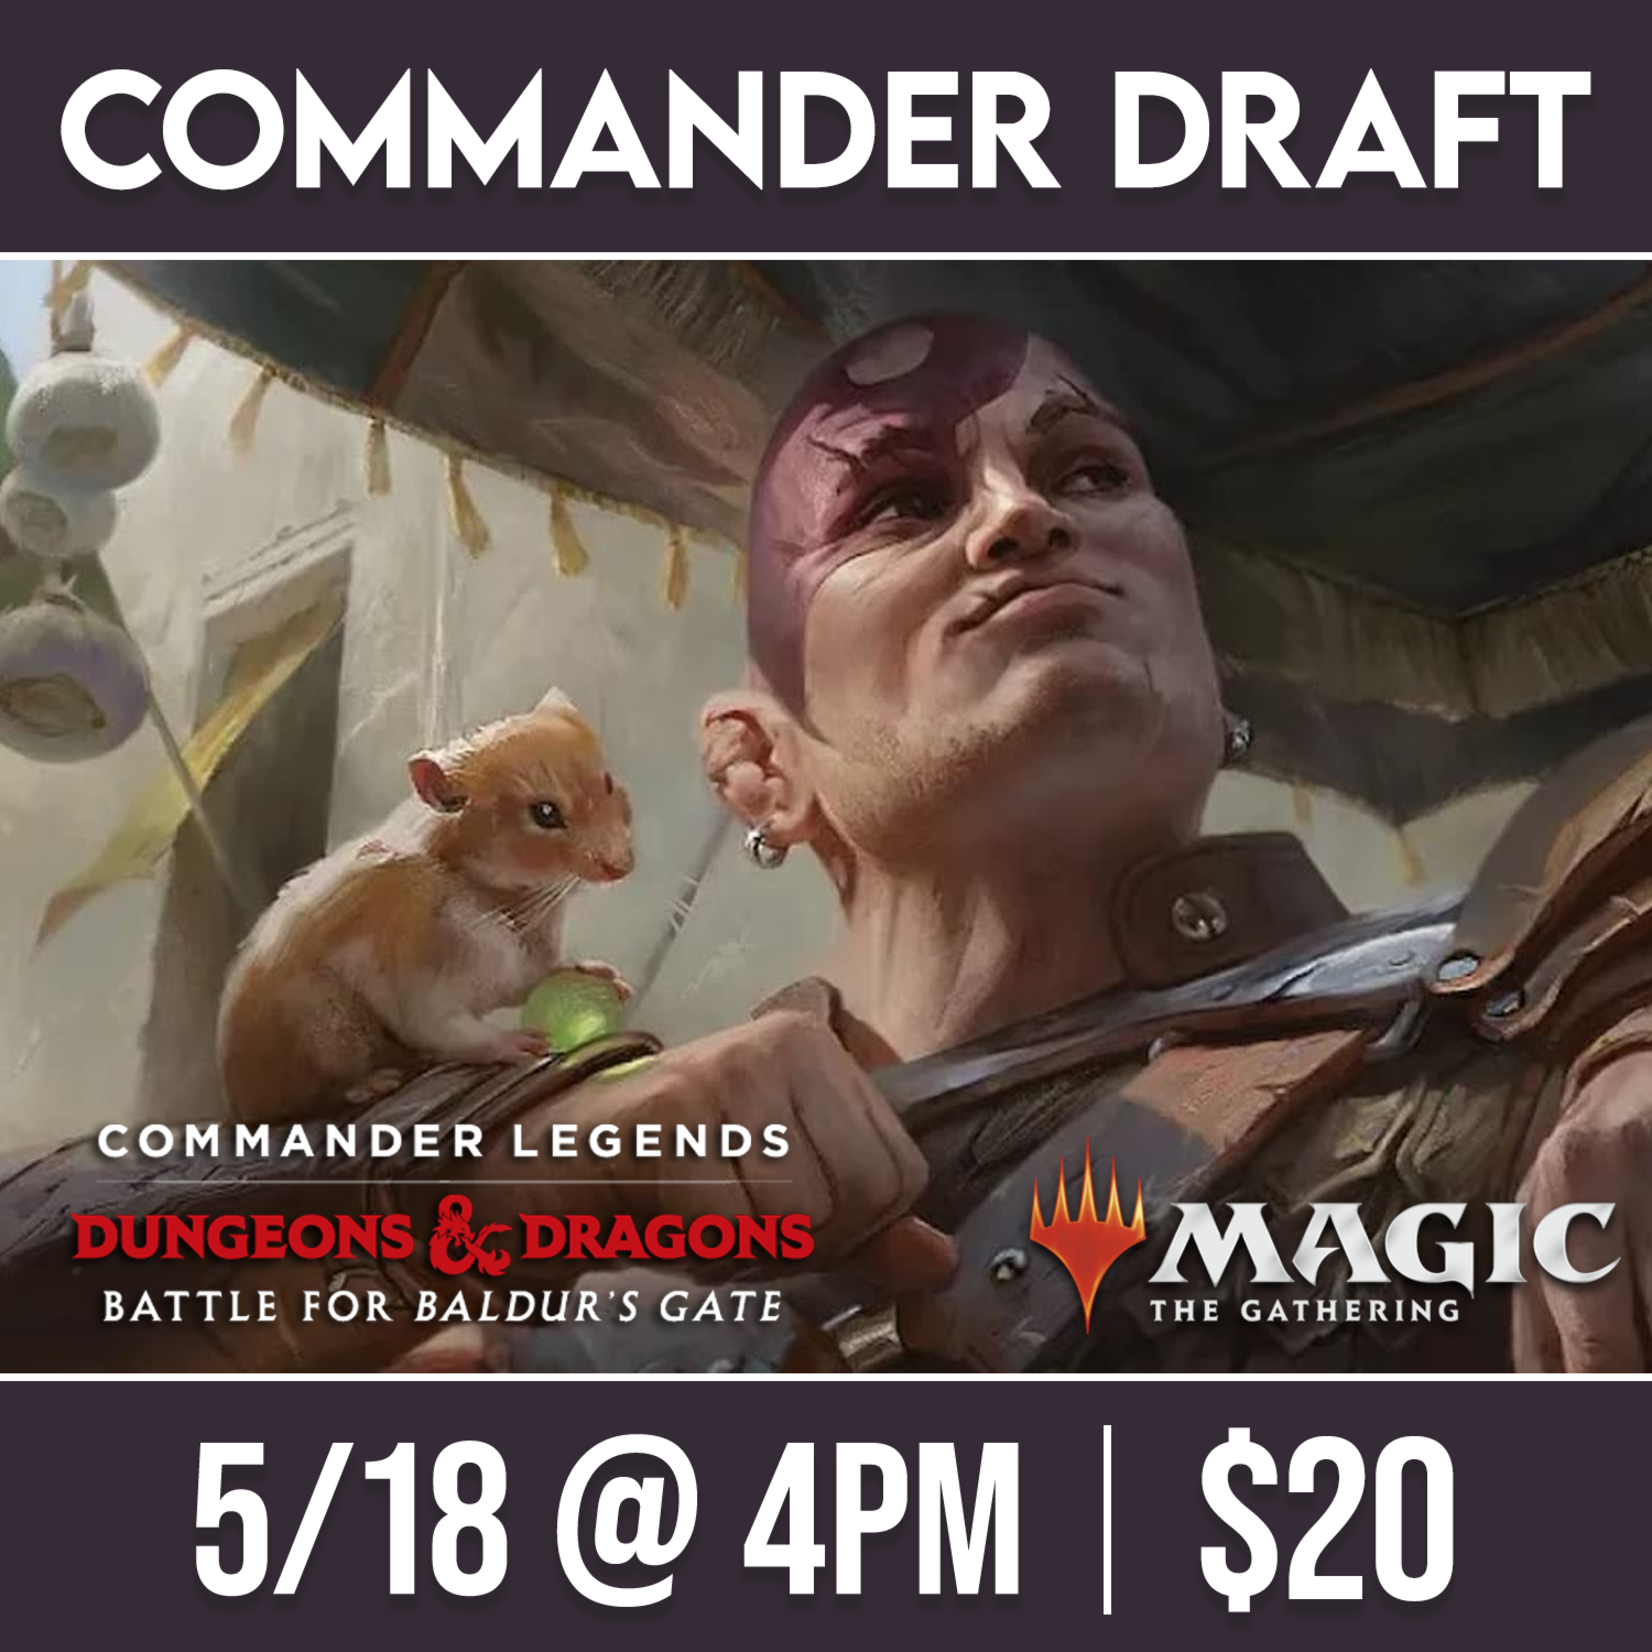 Magic: the Gathering Events 05/18 Saturday @ 4 PM - Battle for Baldur's Gate Commander Draft